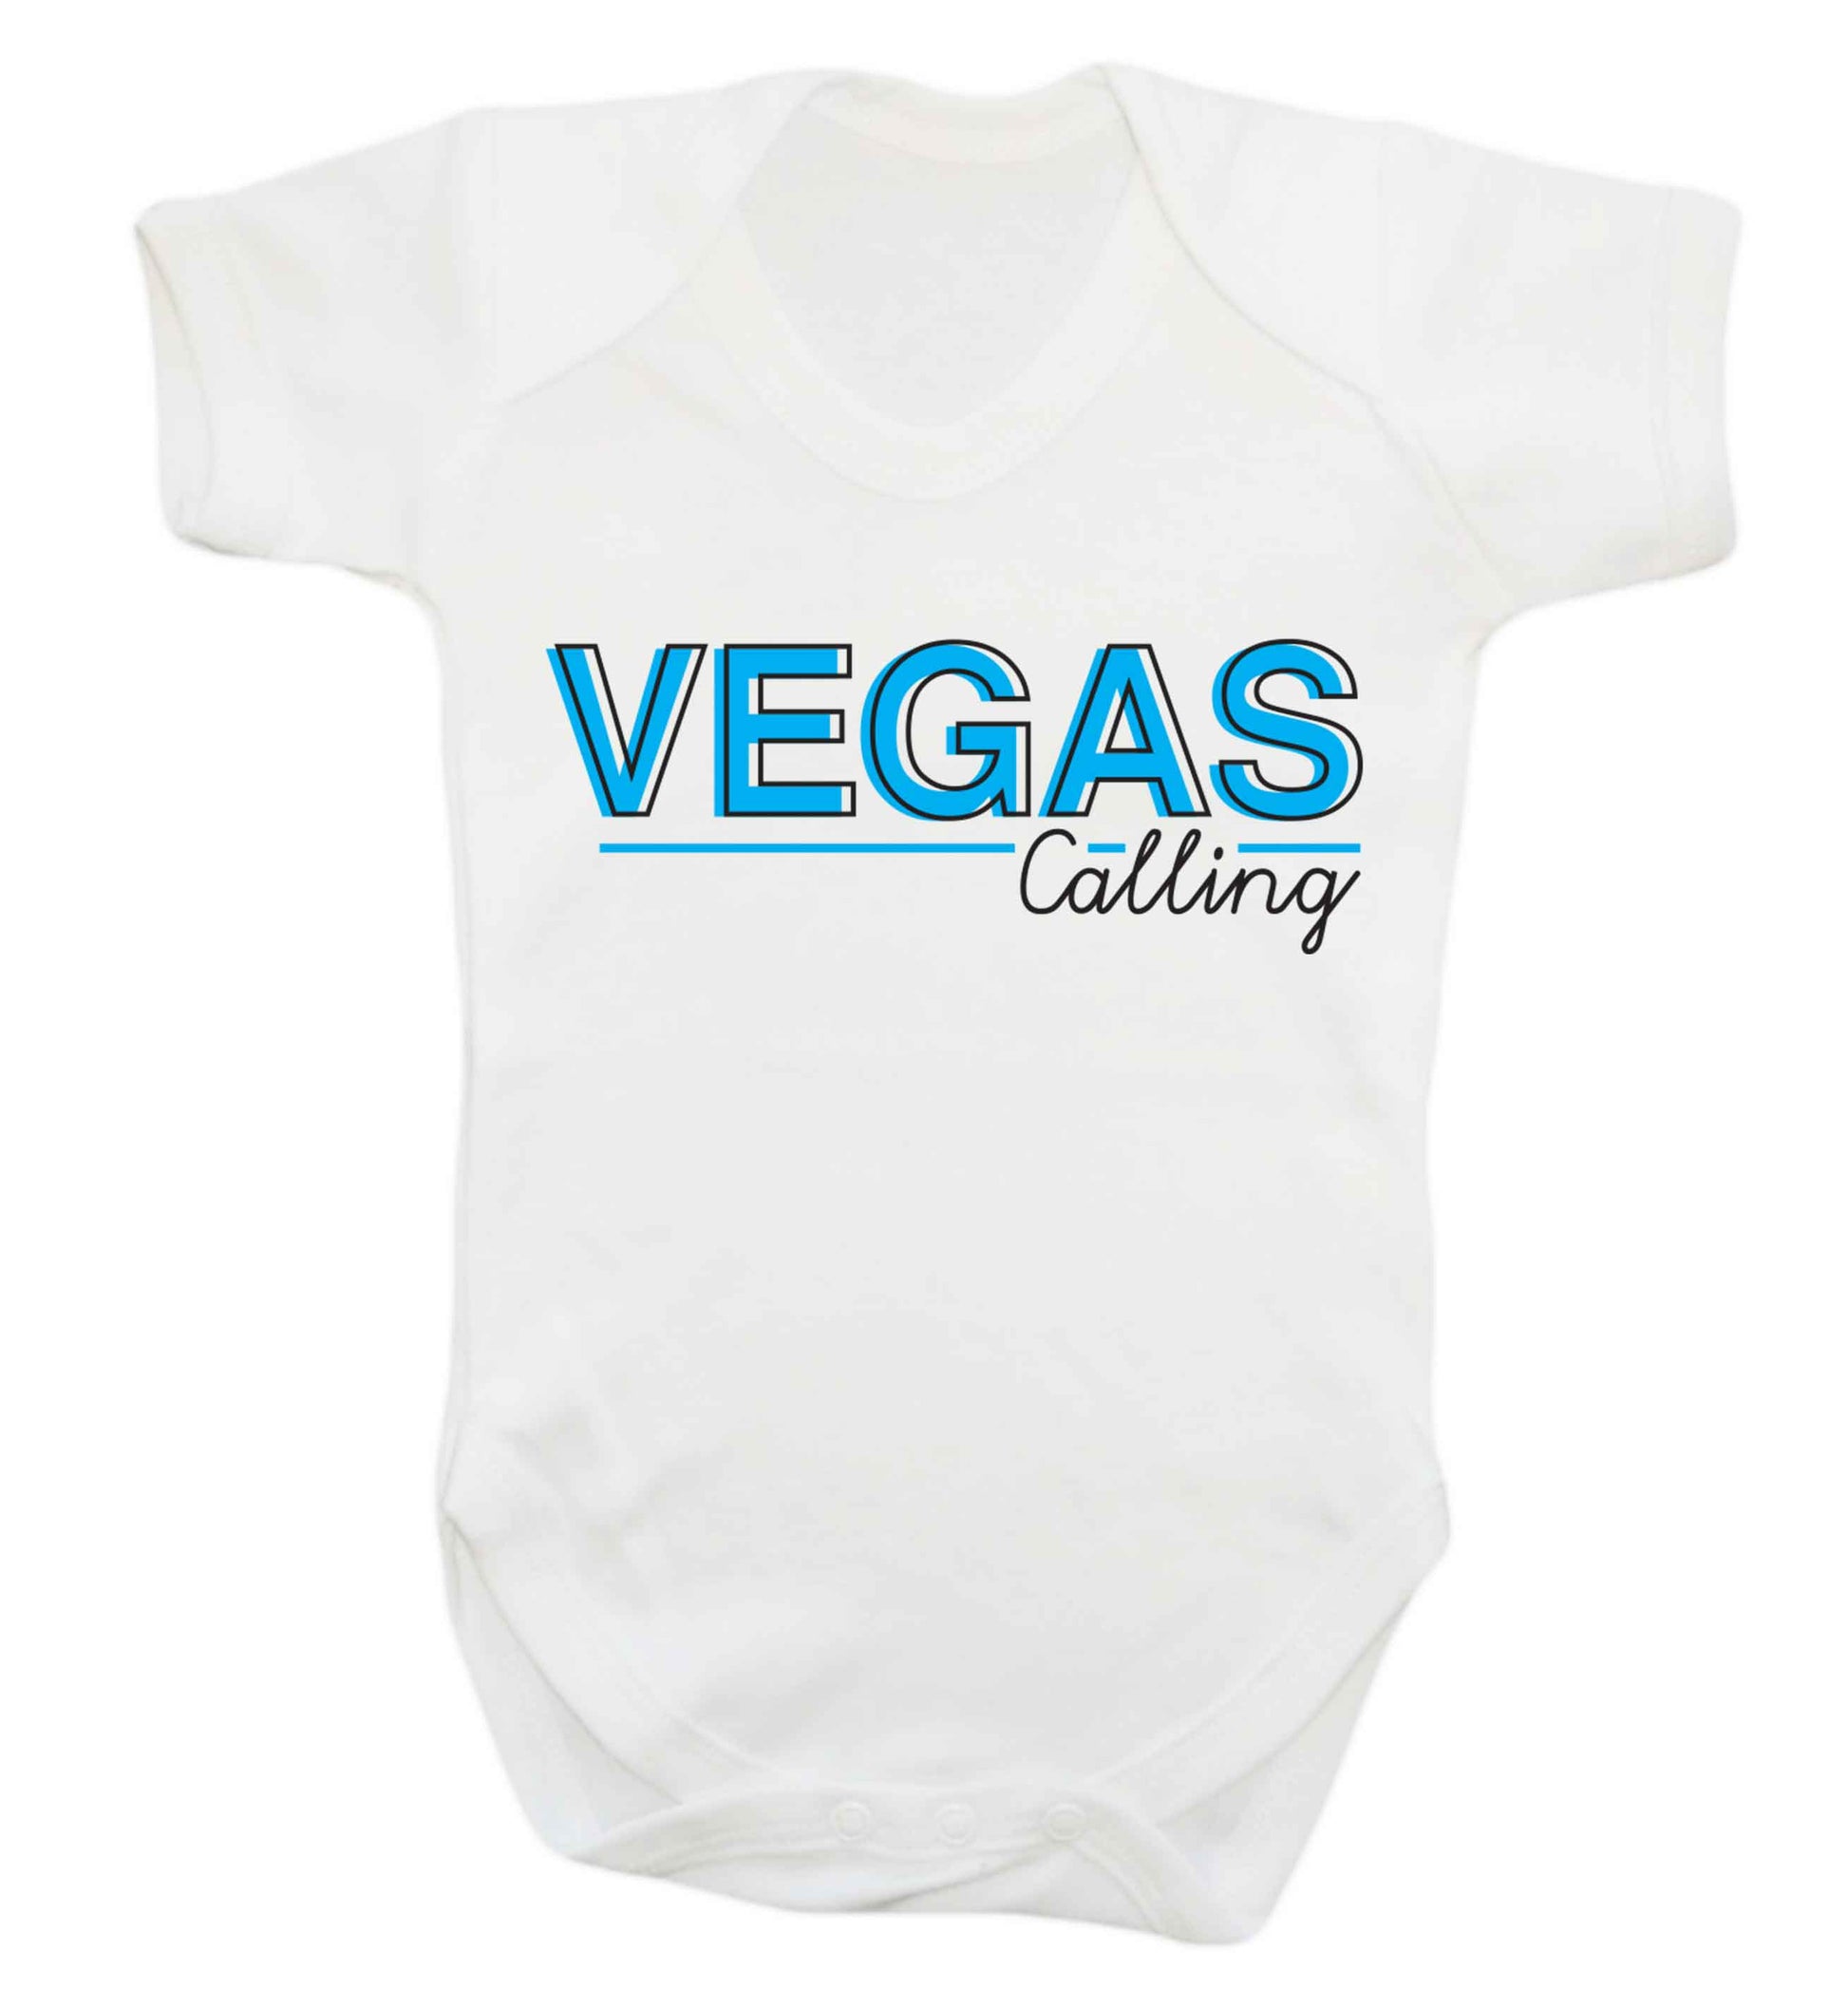 Vegas calling Baby Vest white 18-24 months